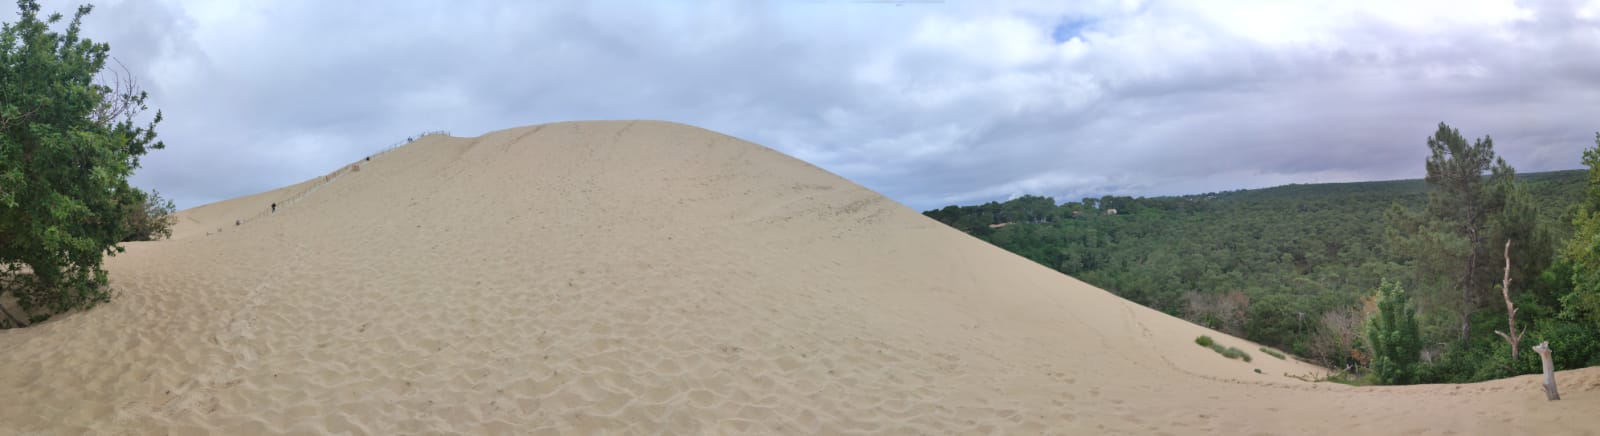 dune Pilat (2)